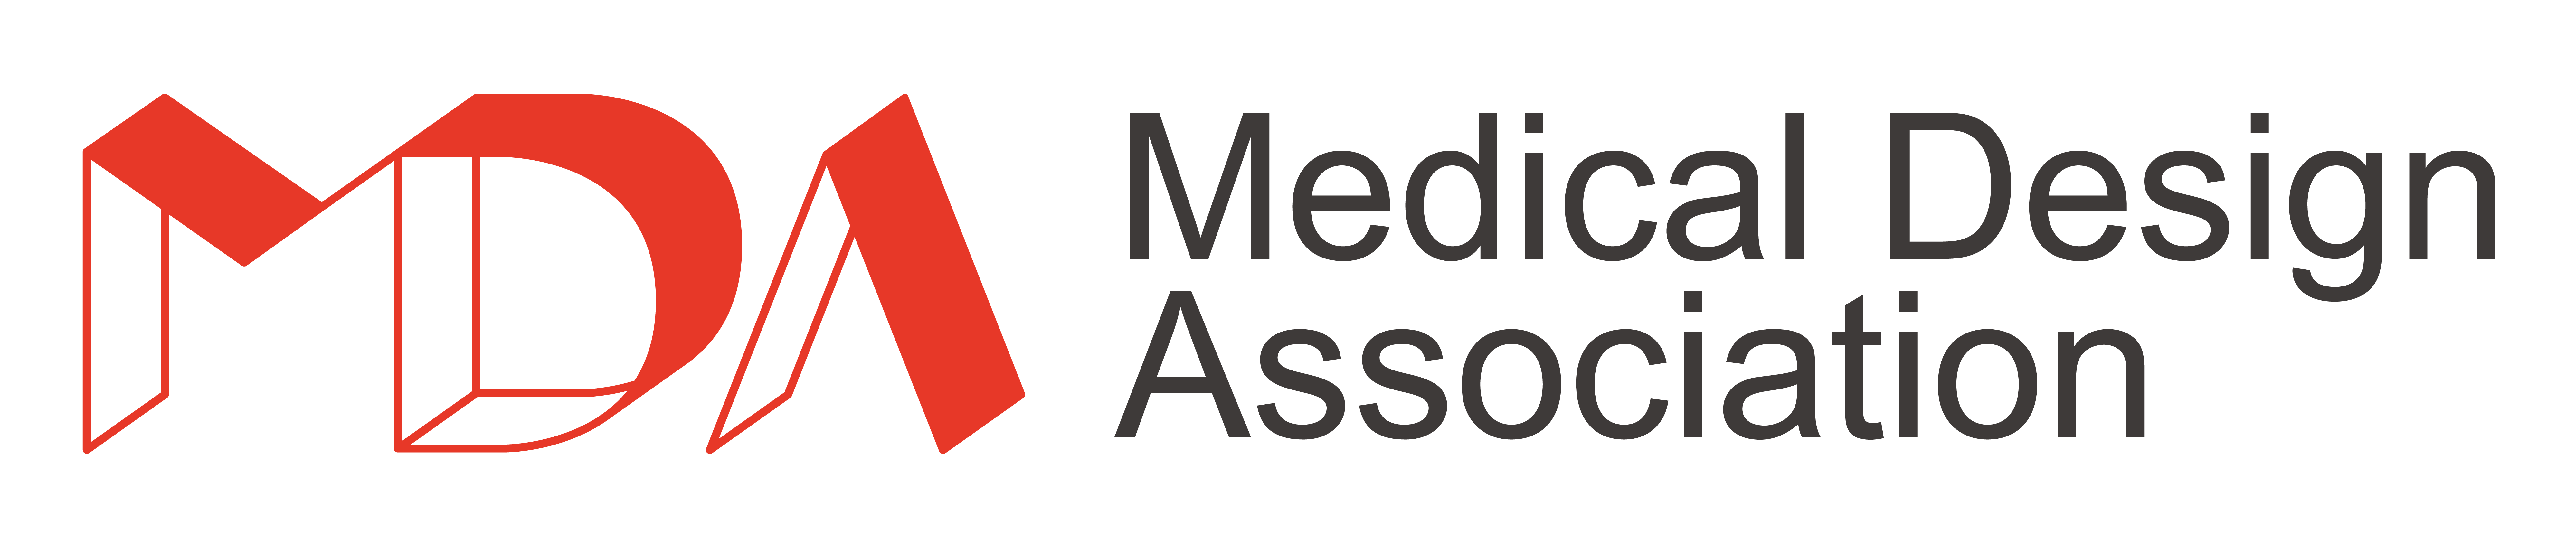 Medical Design Association Logo